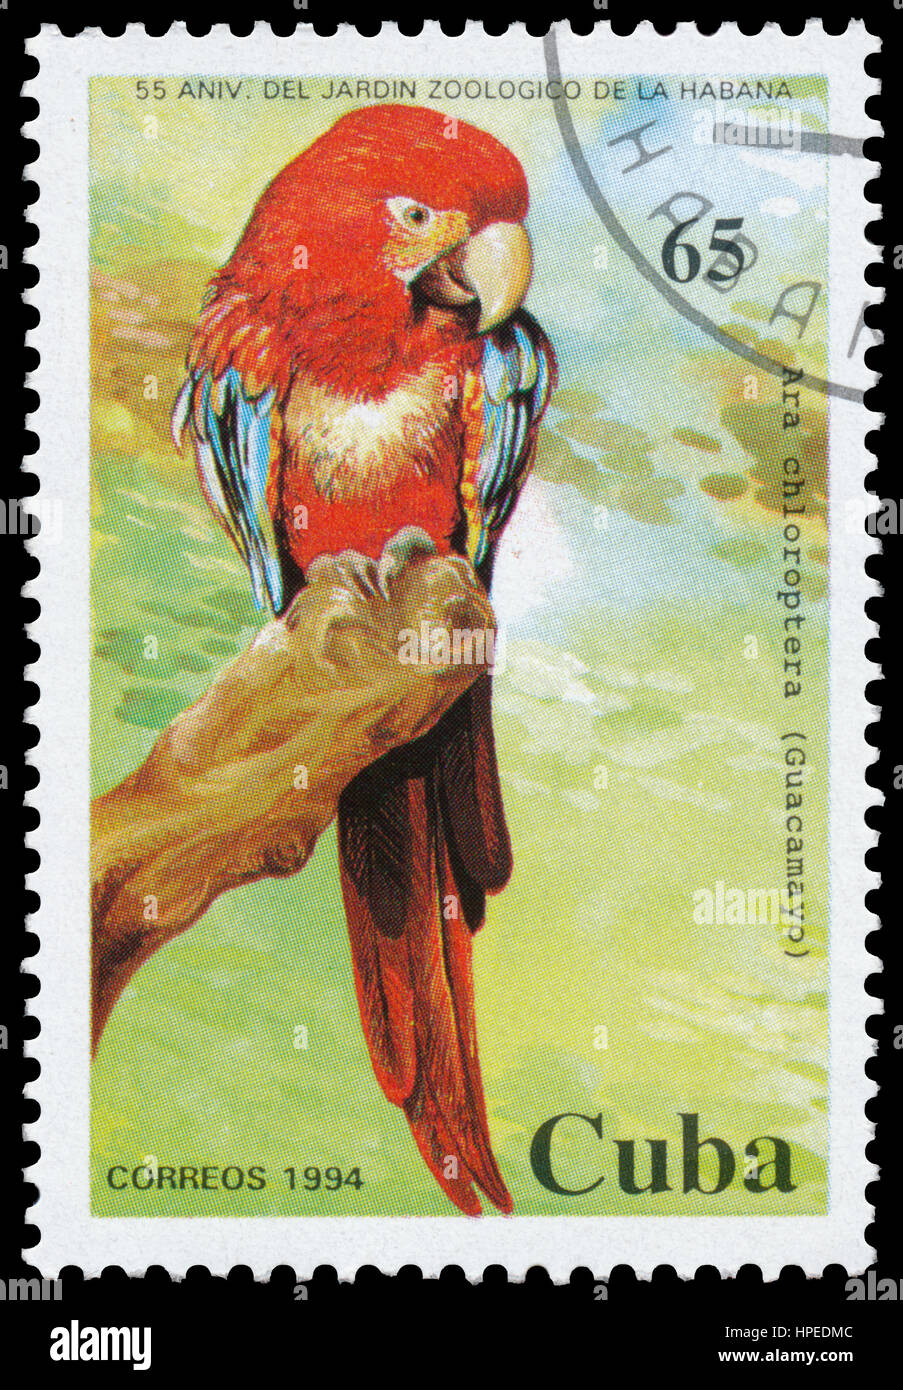 Old vintage Cuban postal stamps Stock Photo - Alamy